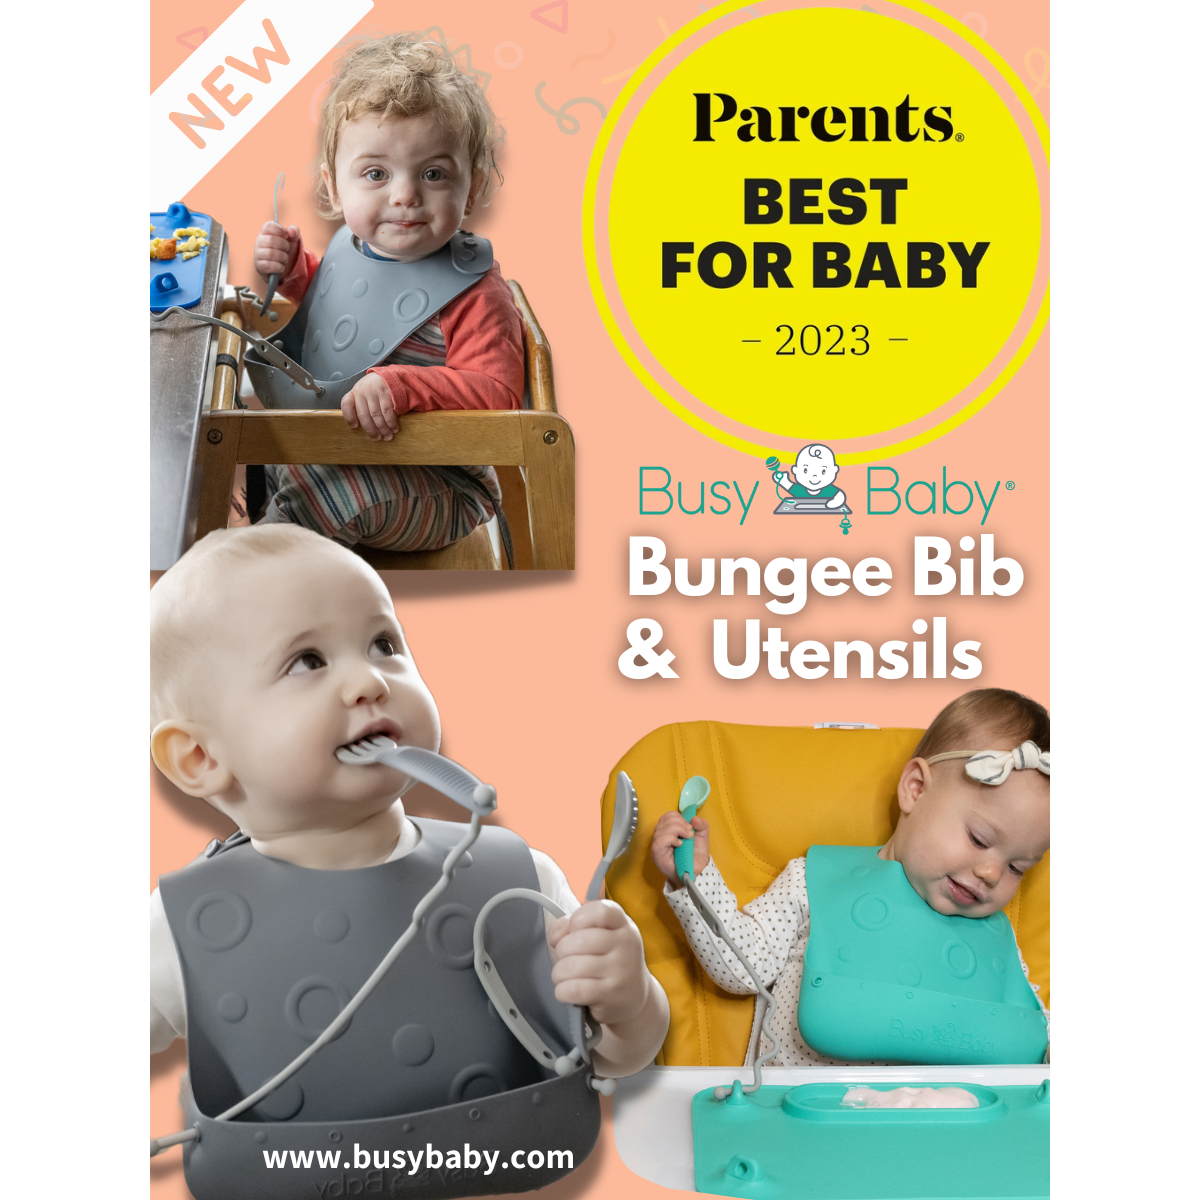 Busy Baby Bungee Bib & Utensil Set